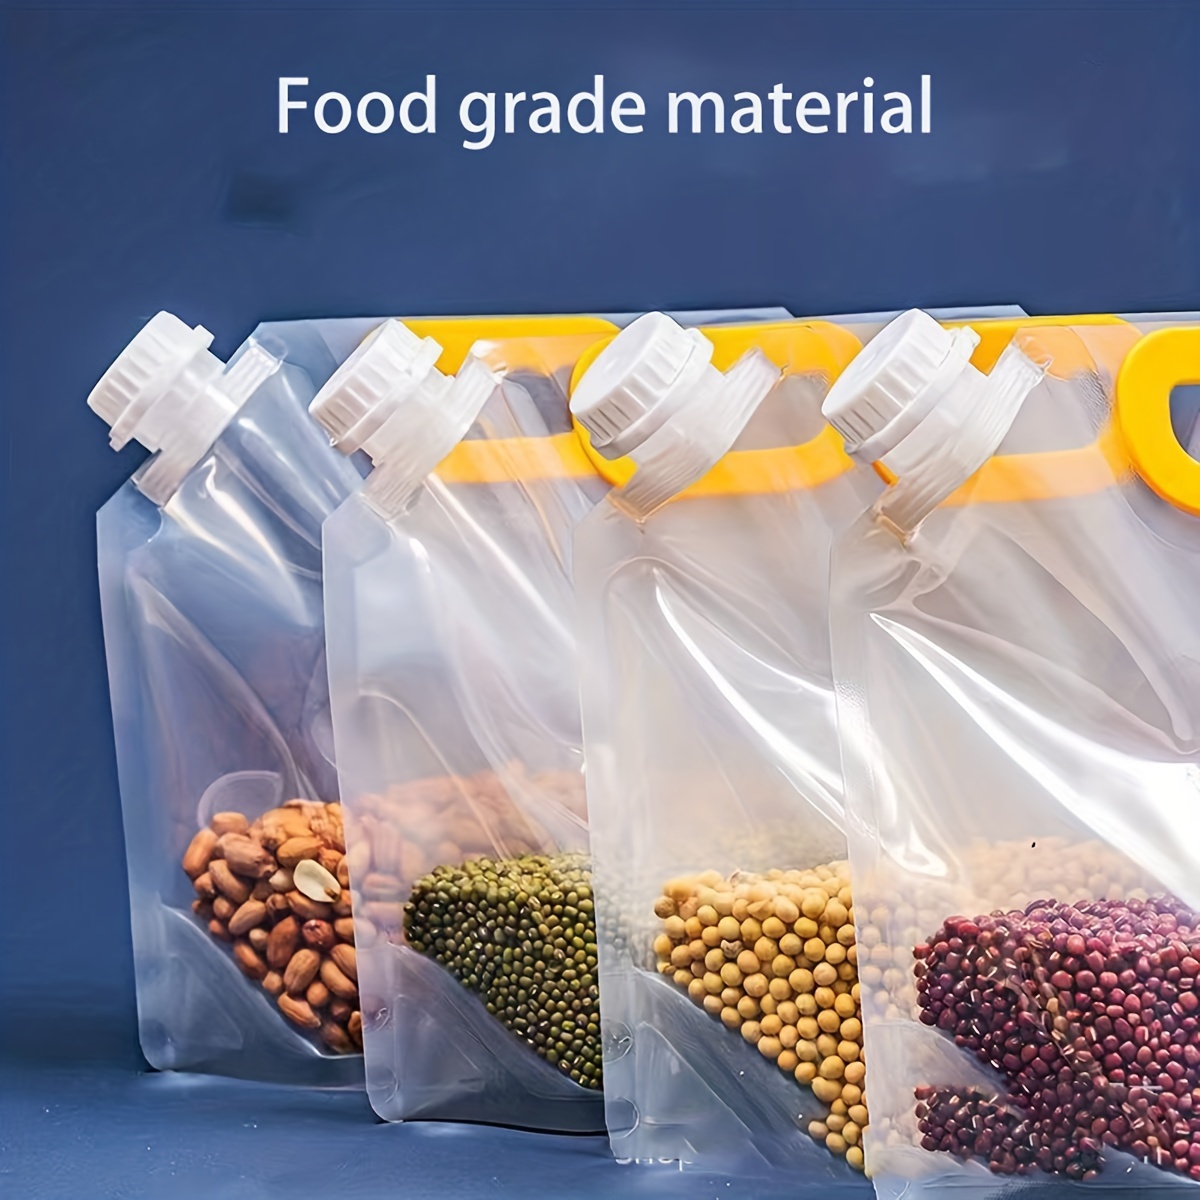 5pcs Grain Storage Bags Transparent Grain Storage Bags Cereal